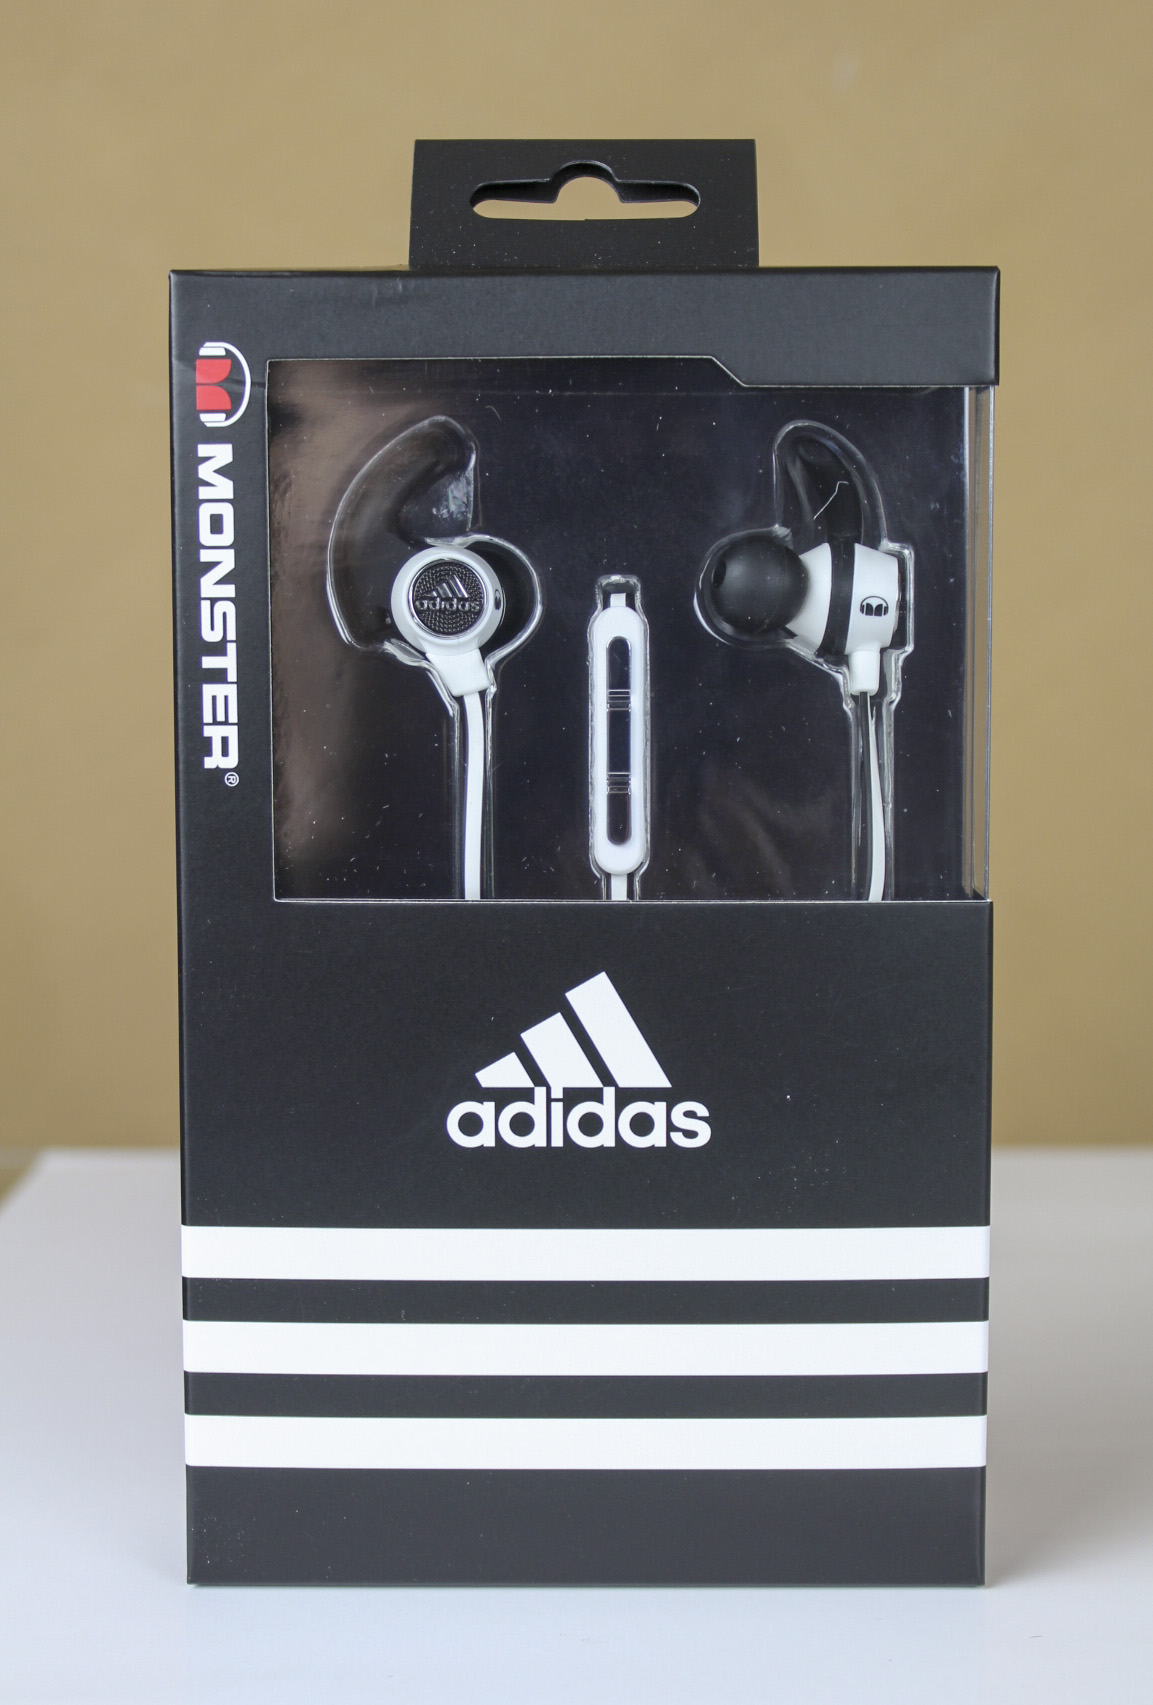 guapo grano estropeado Review: Adidas Sport Supernova In-Ear Headphones by Monster - Beantown  Review